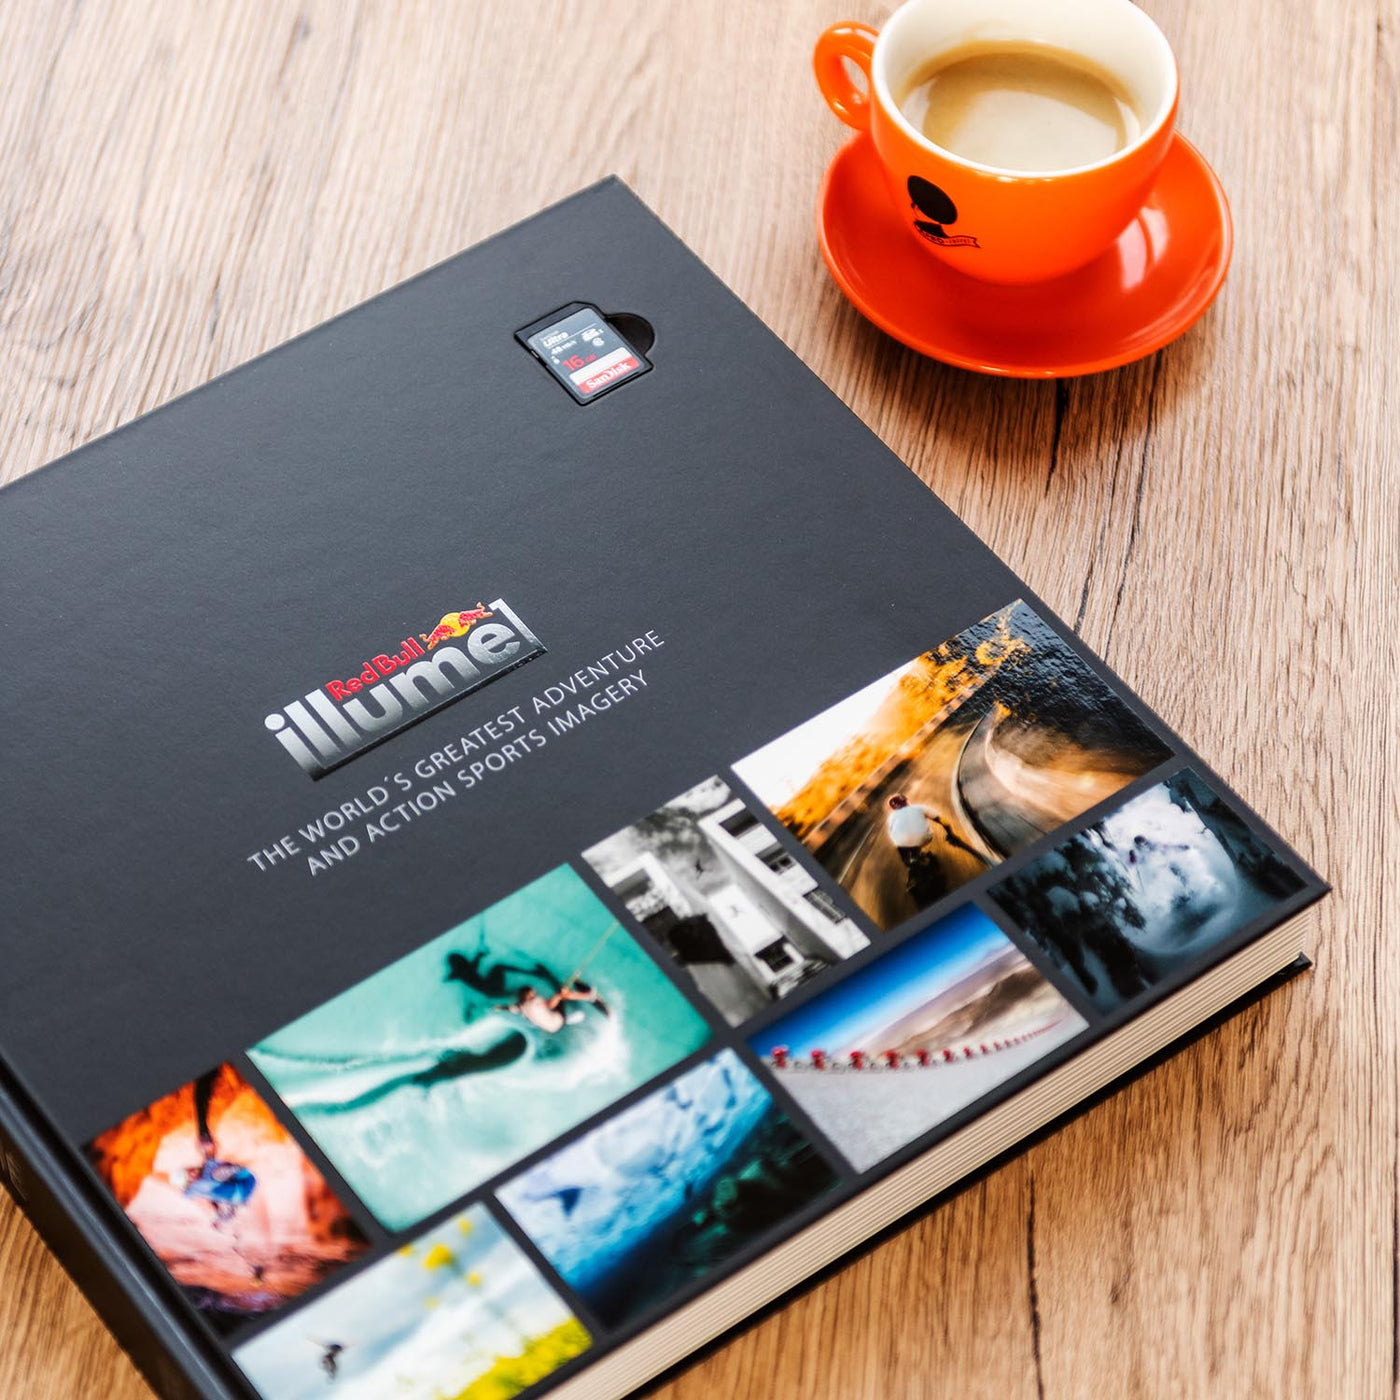 Red Bull Illume Photobook 2019 - Limited Edition